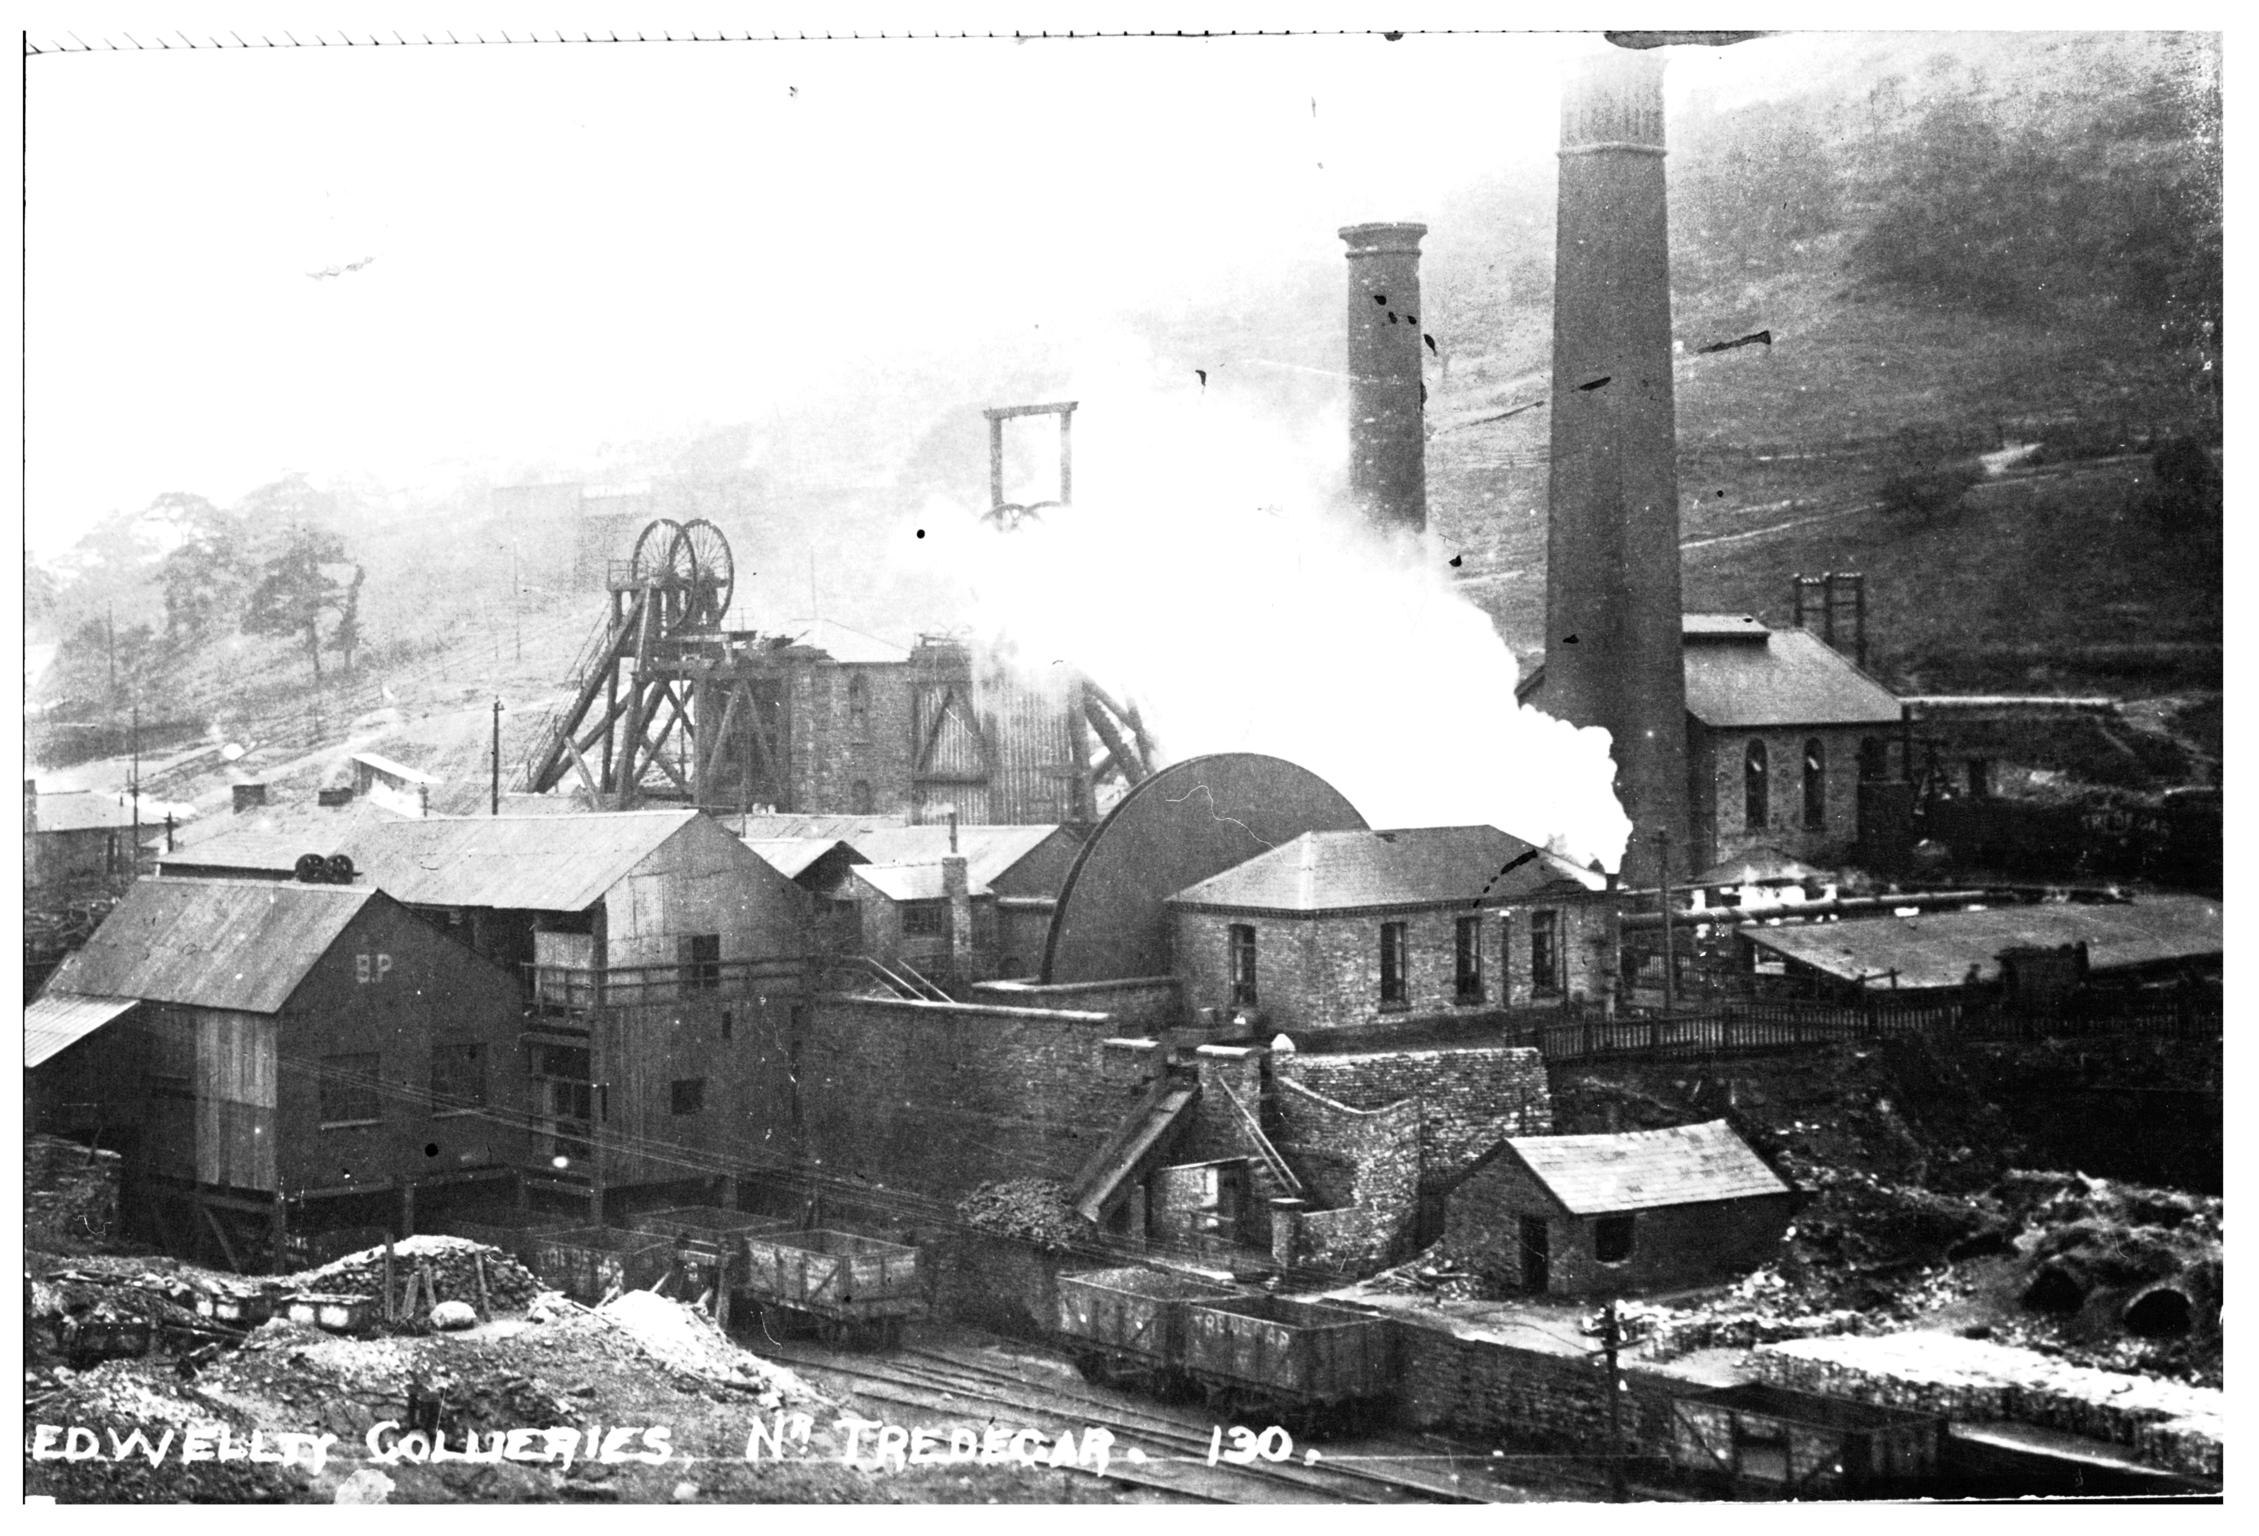 Bedwellty Colliery, film negative